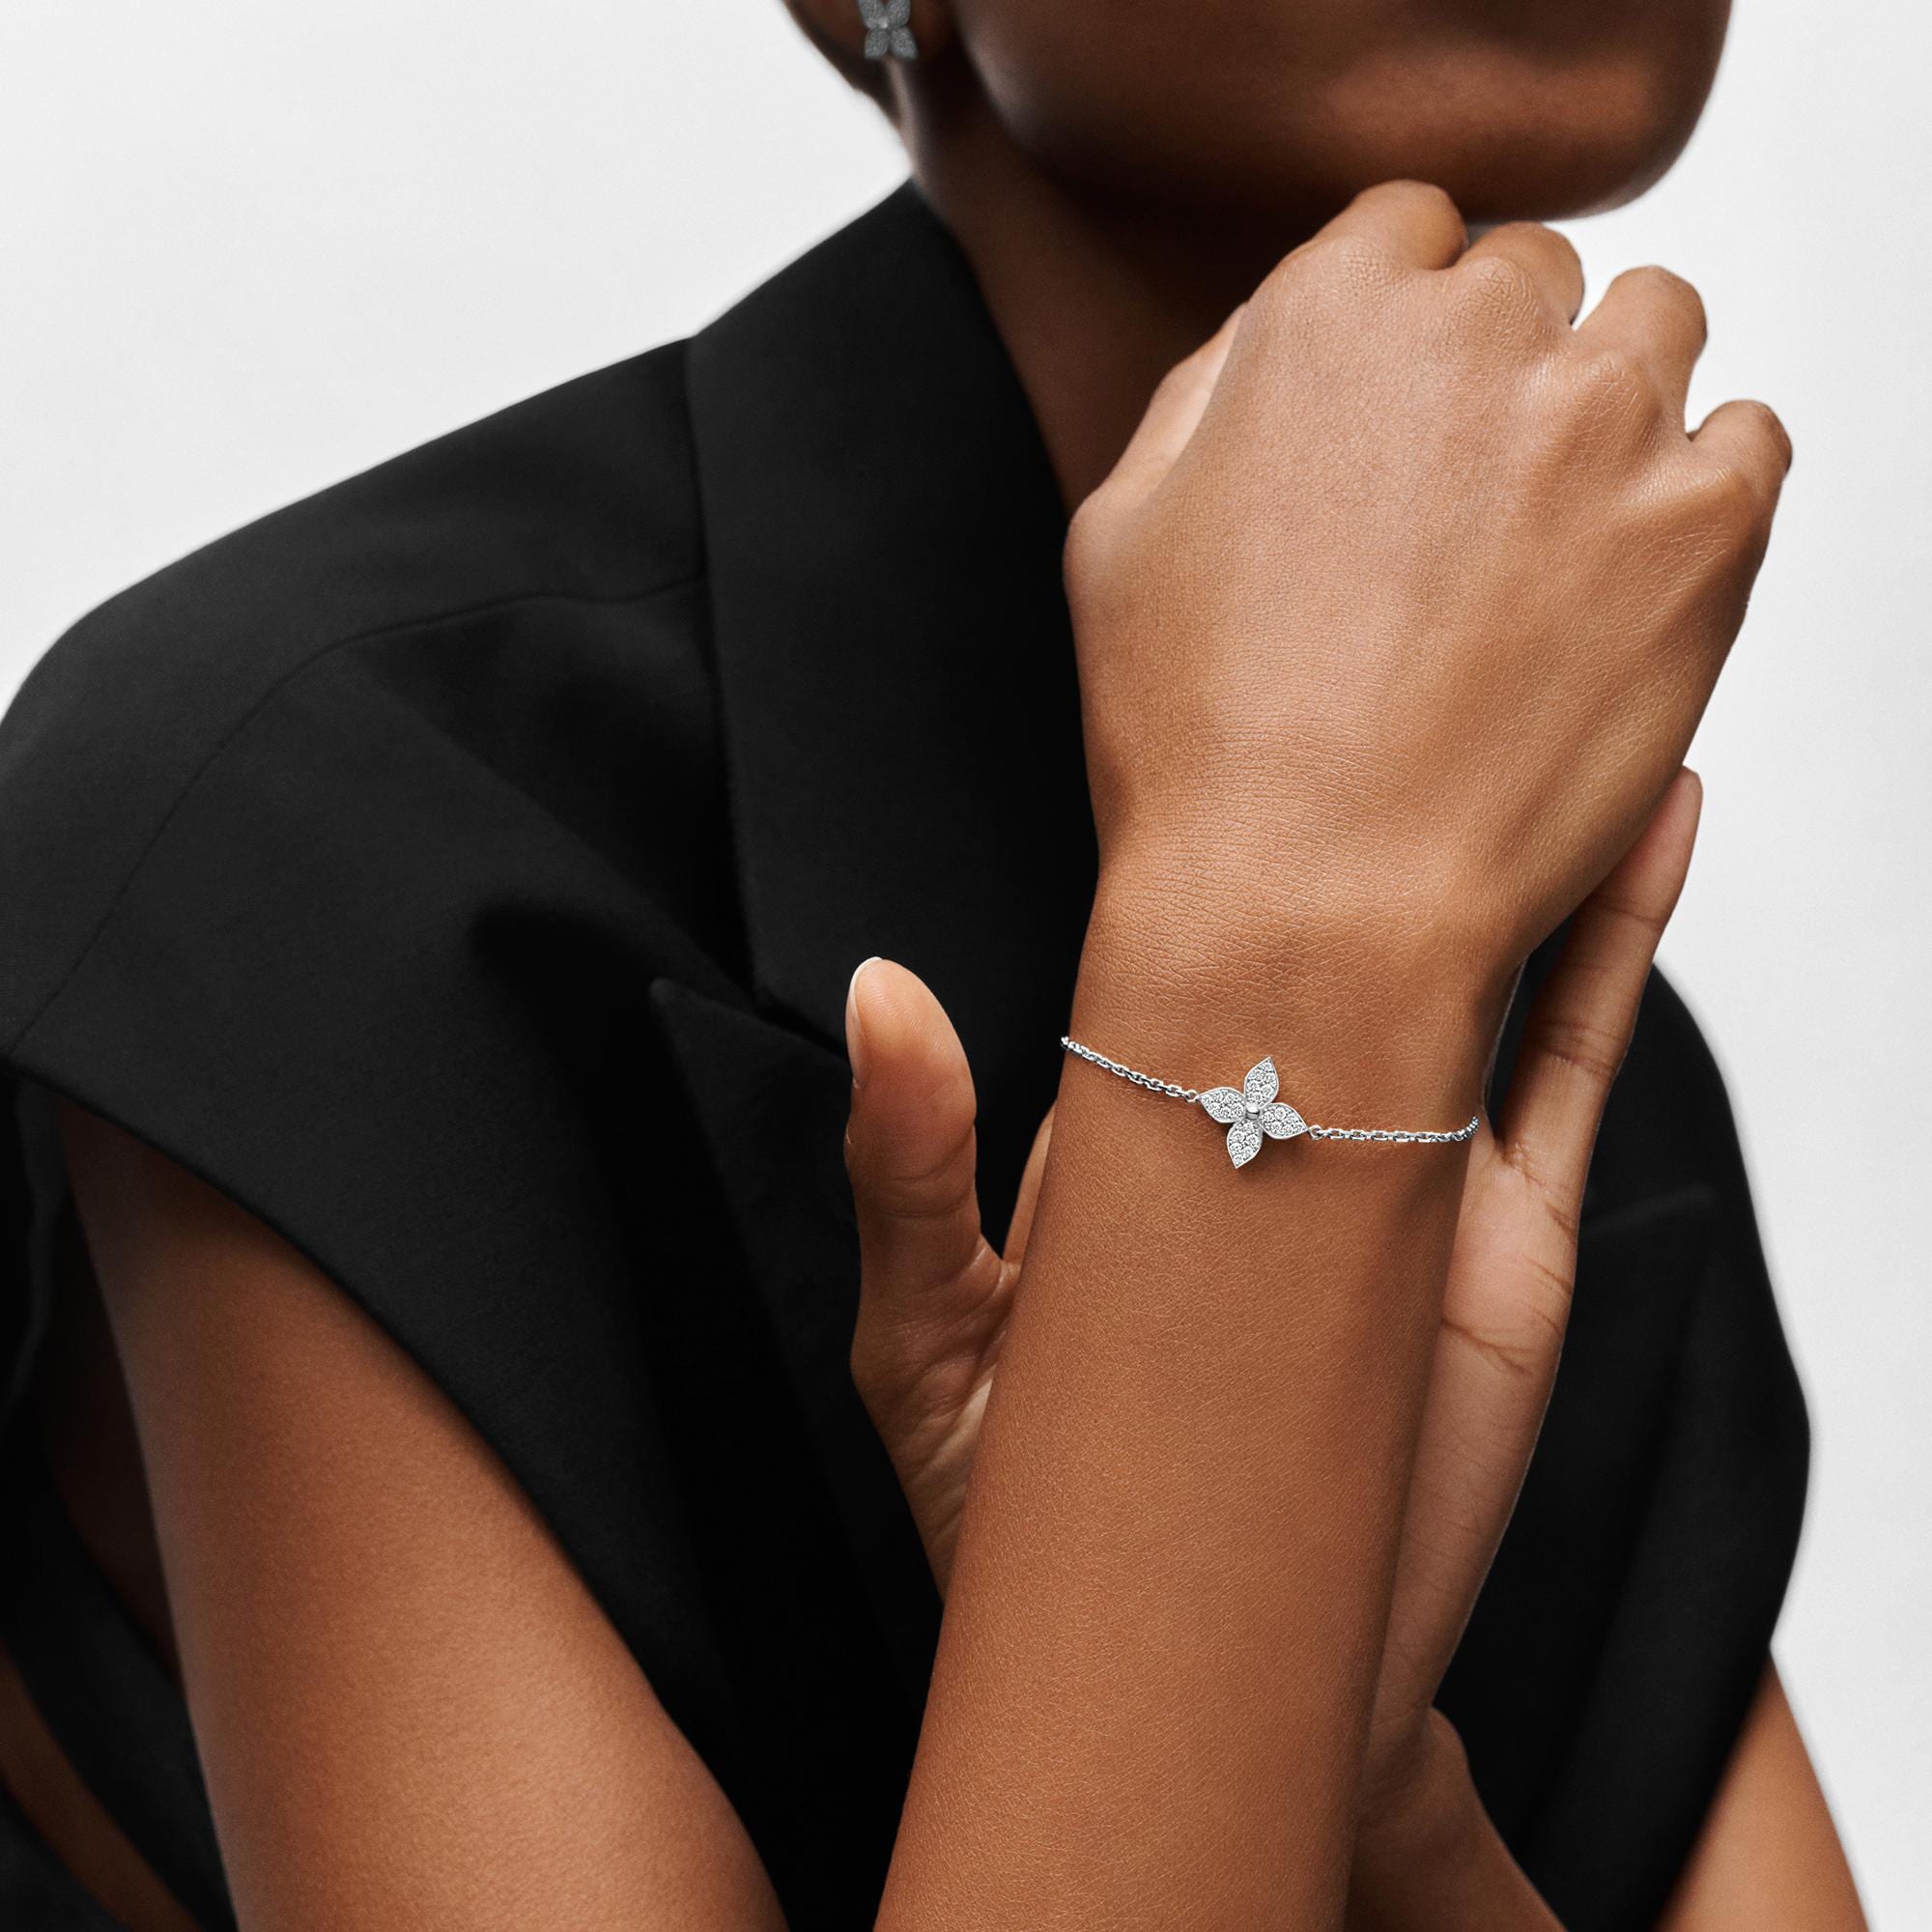 Louis Vuitton Star Blossom Bracelet, White Gold, Diamonds – Jewelry – Categories Q95912